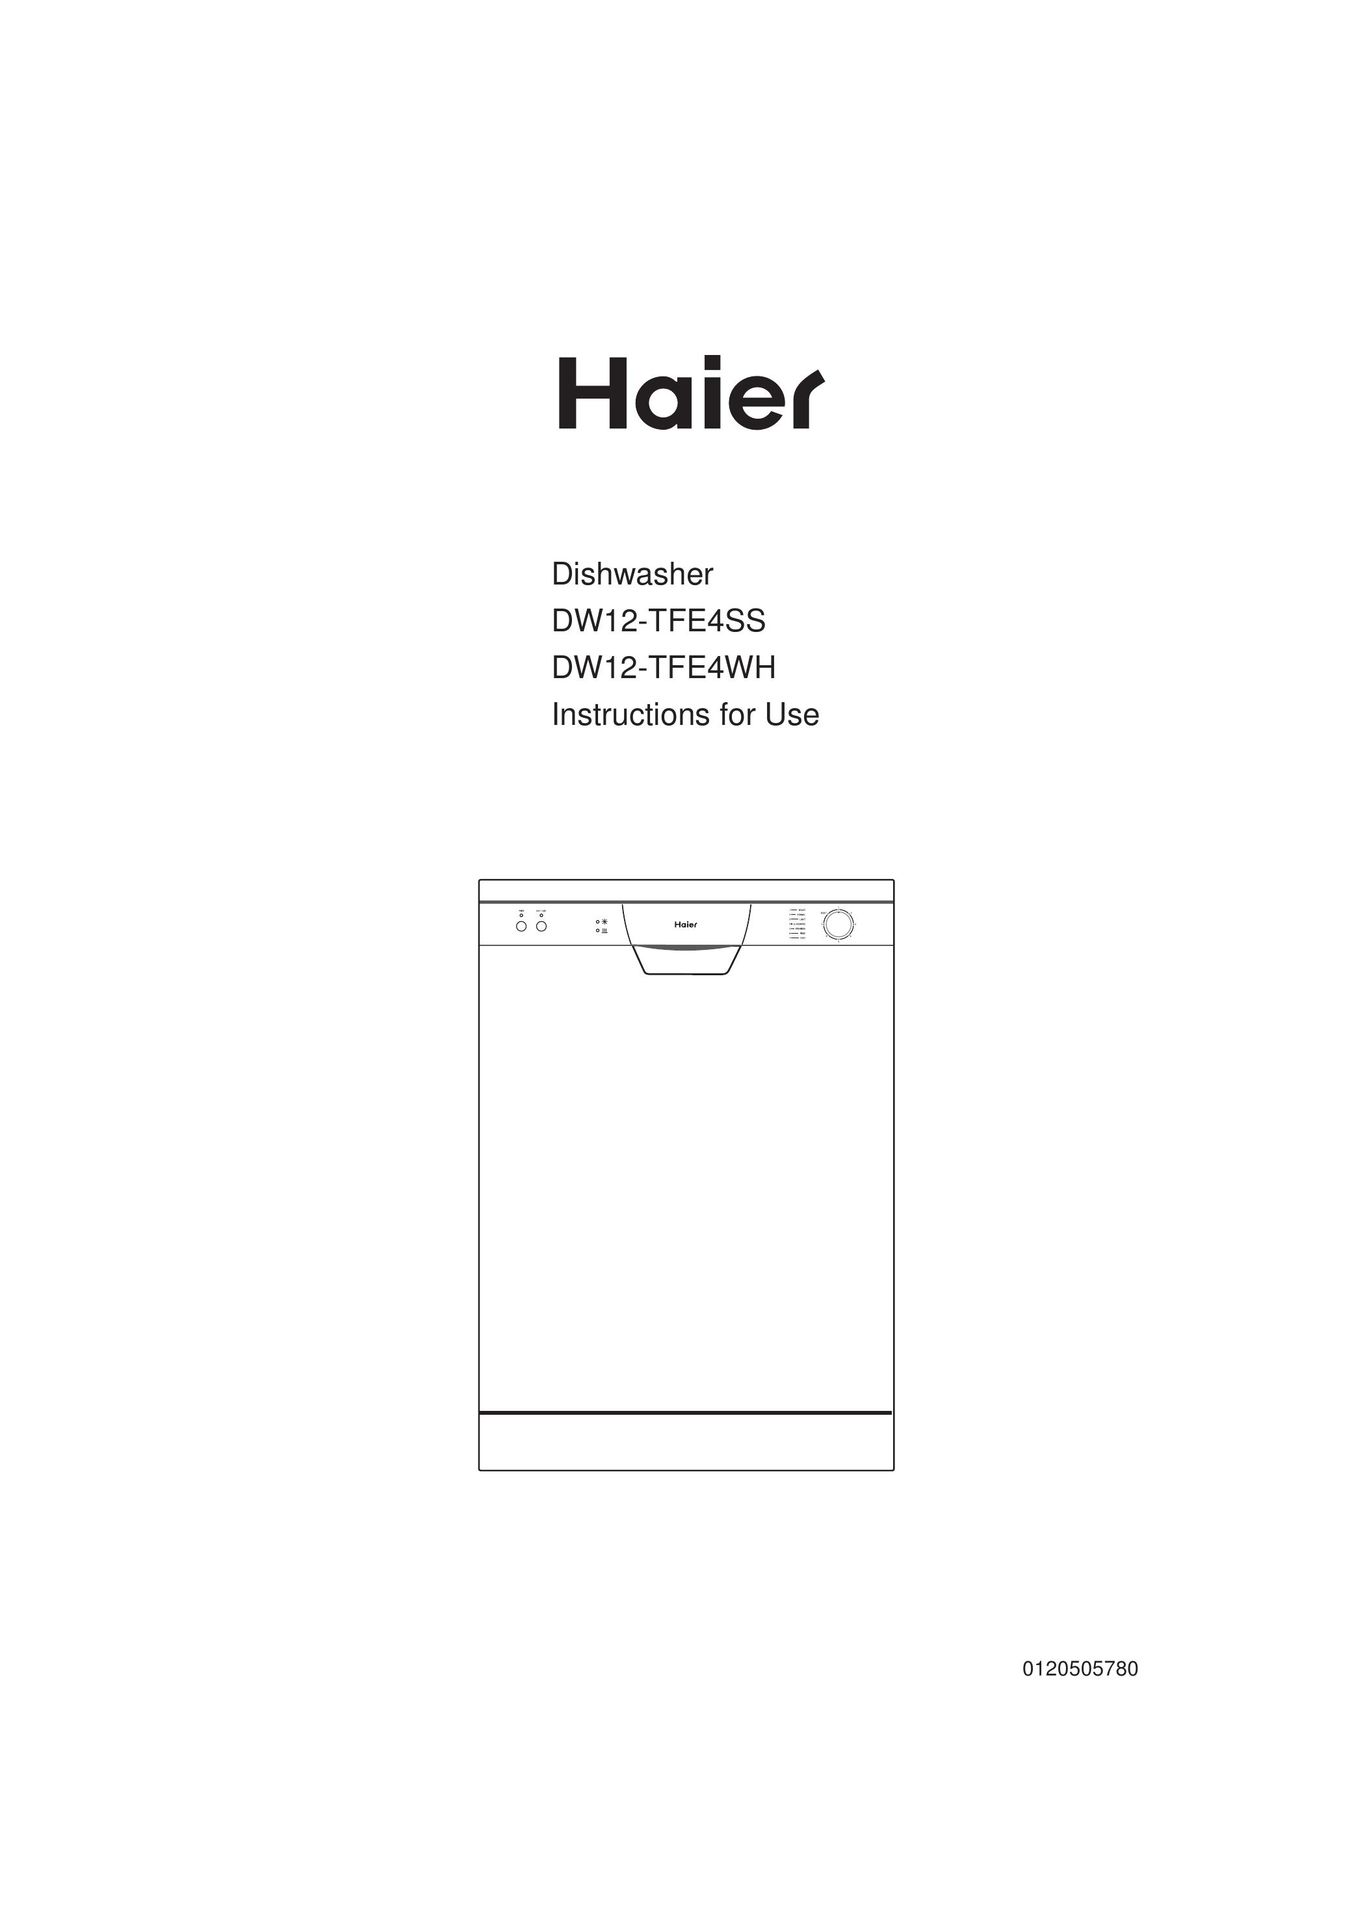 Haier DW12-TFE4WH Dishwasher User Manual